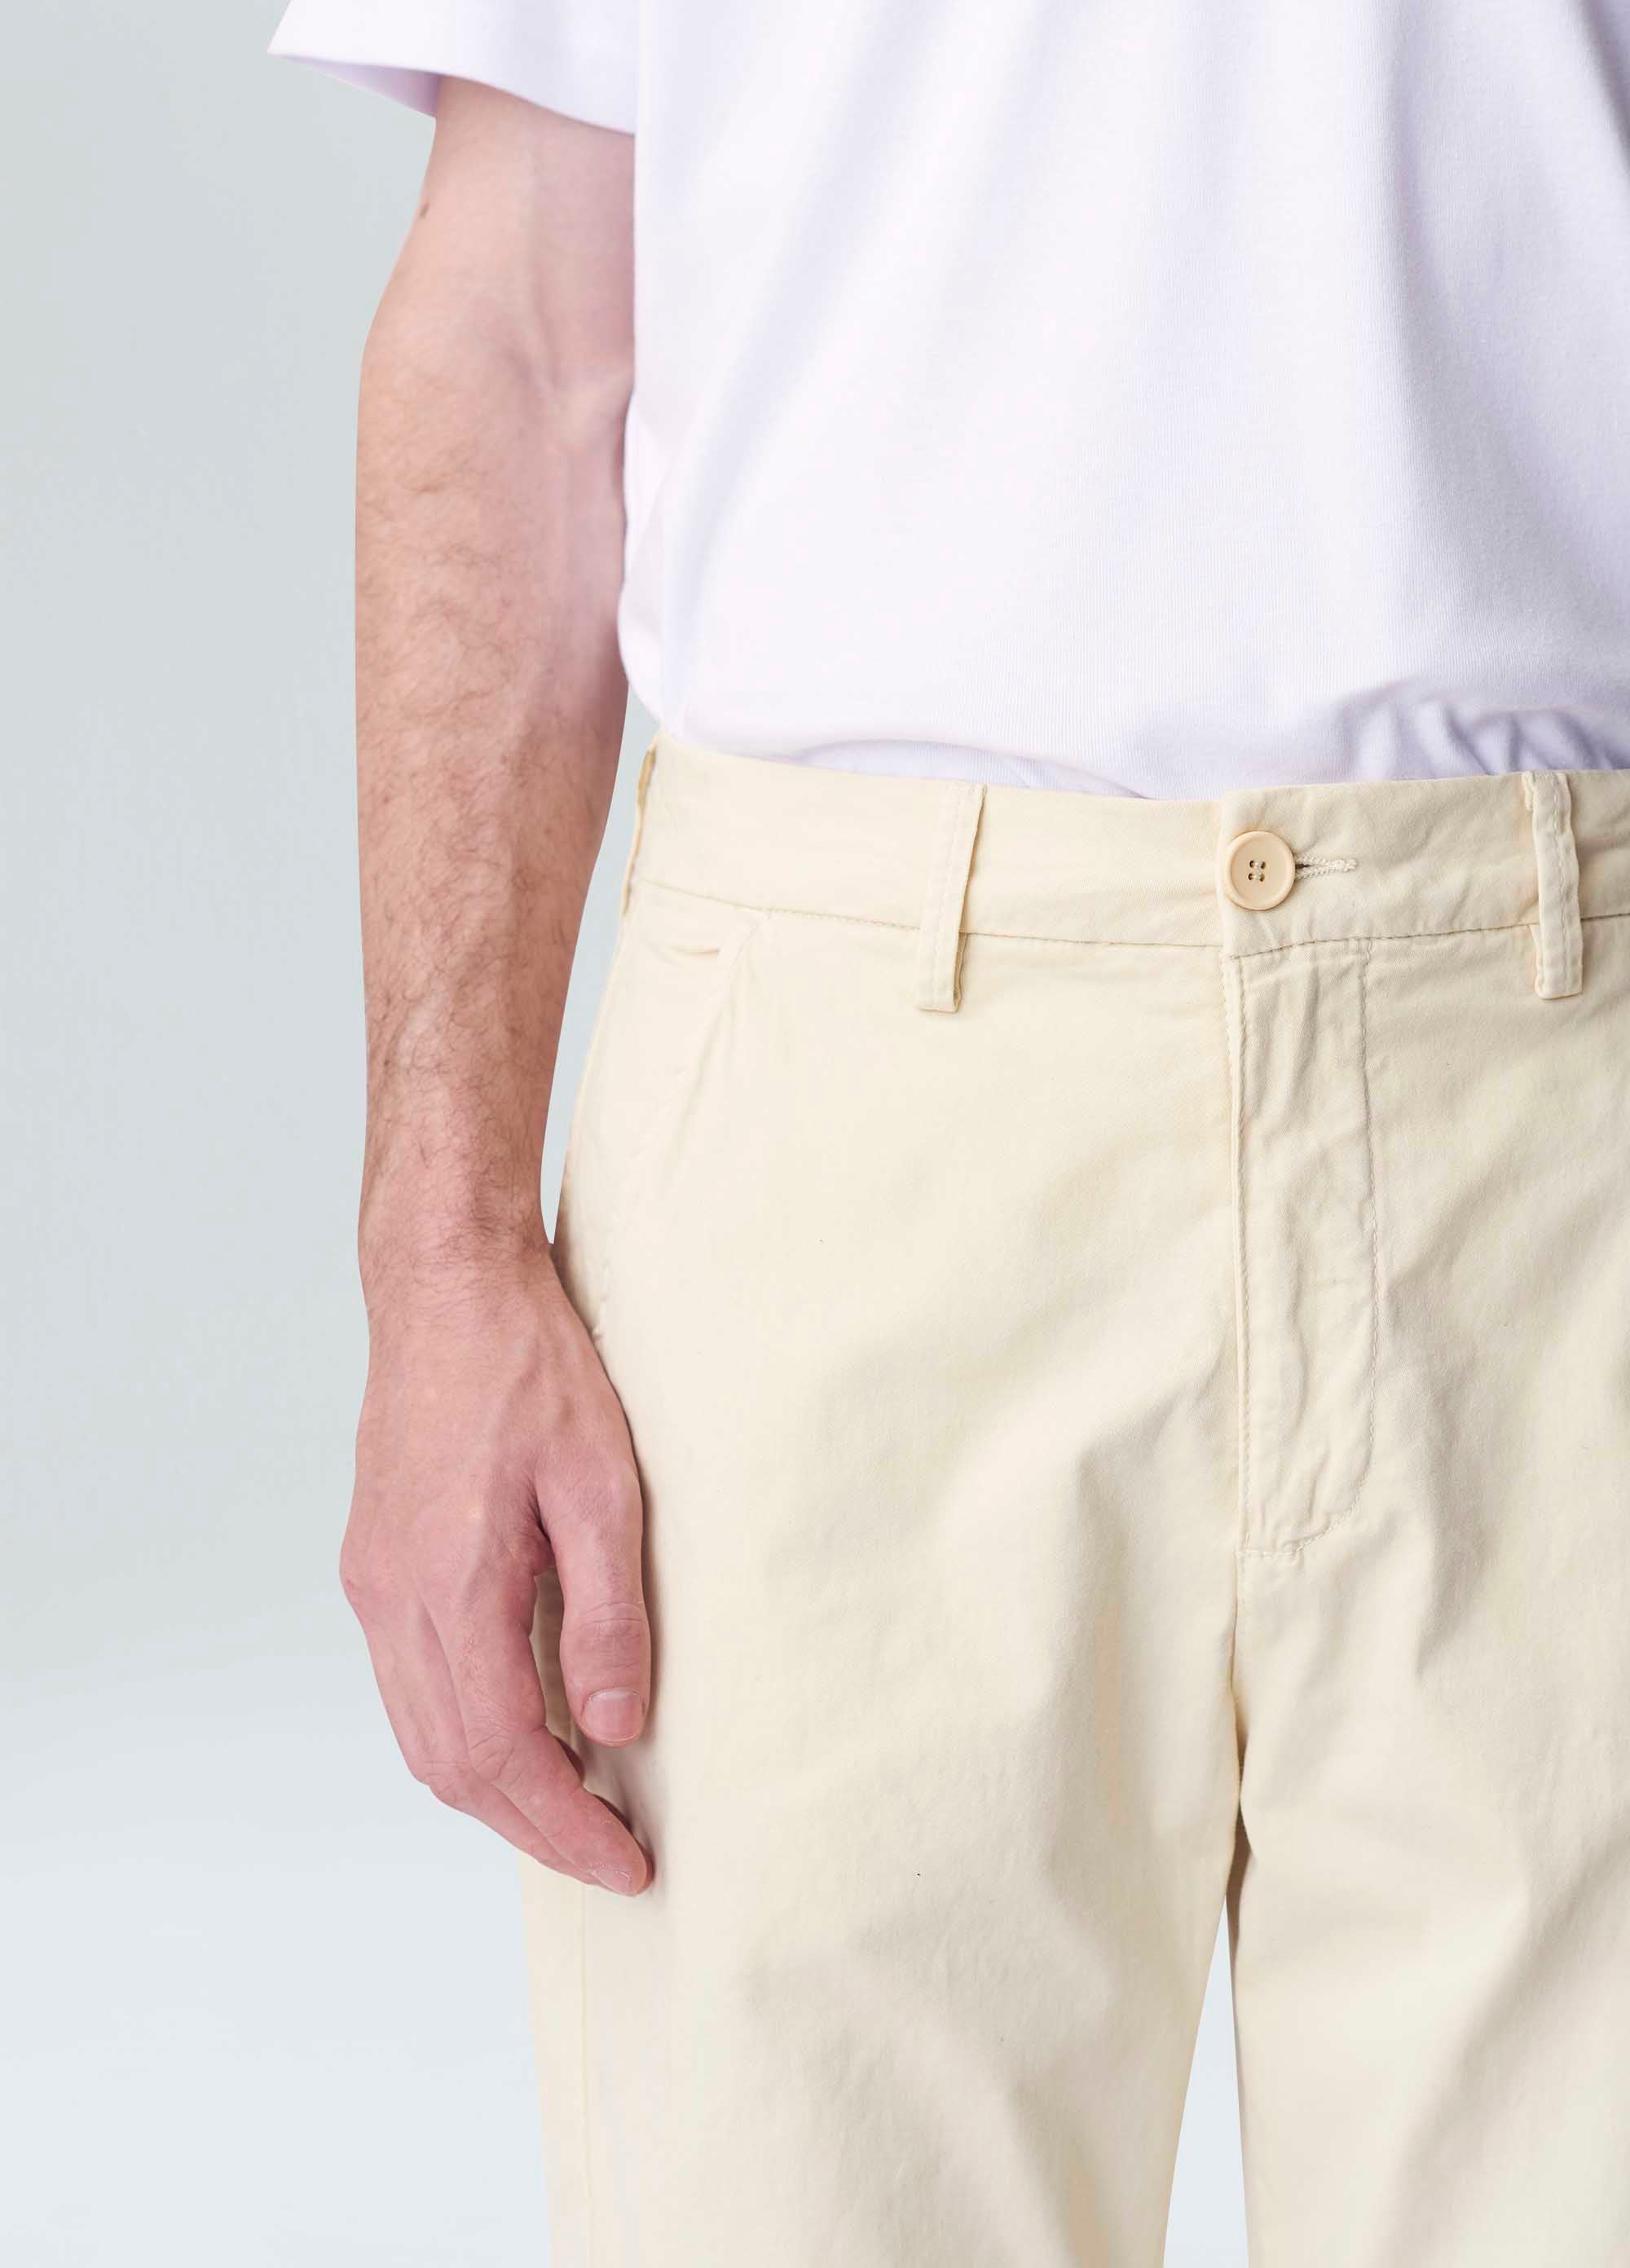 Osklen-Comfort Paper Tailoring Trousers-Justbrazil